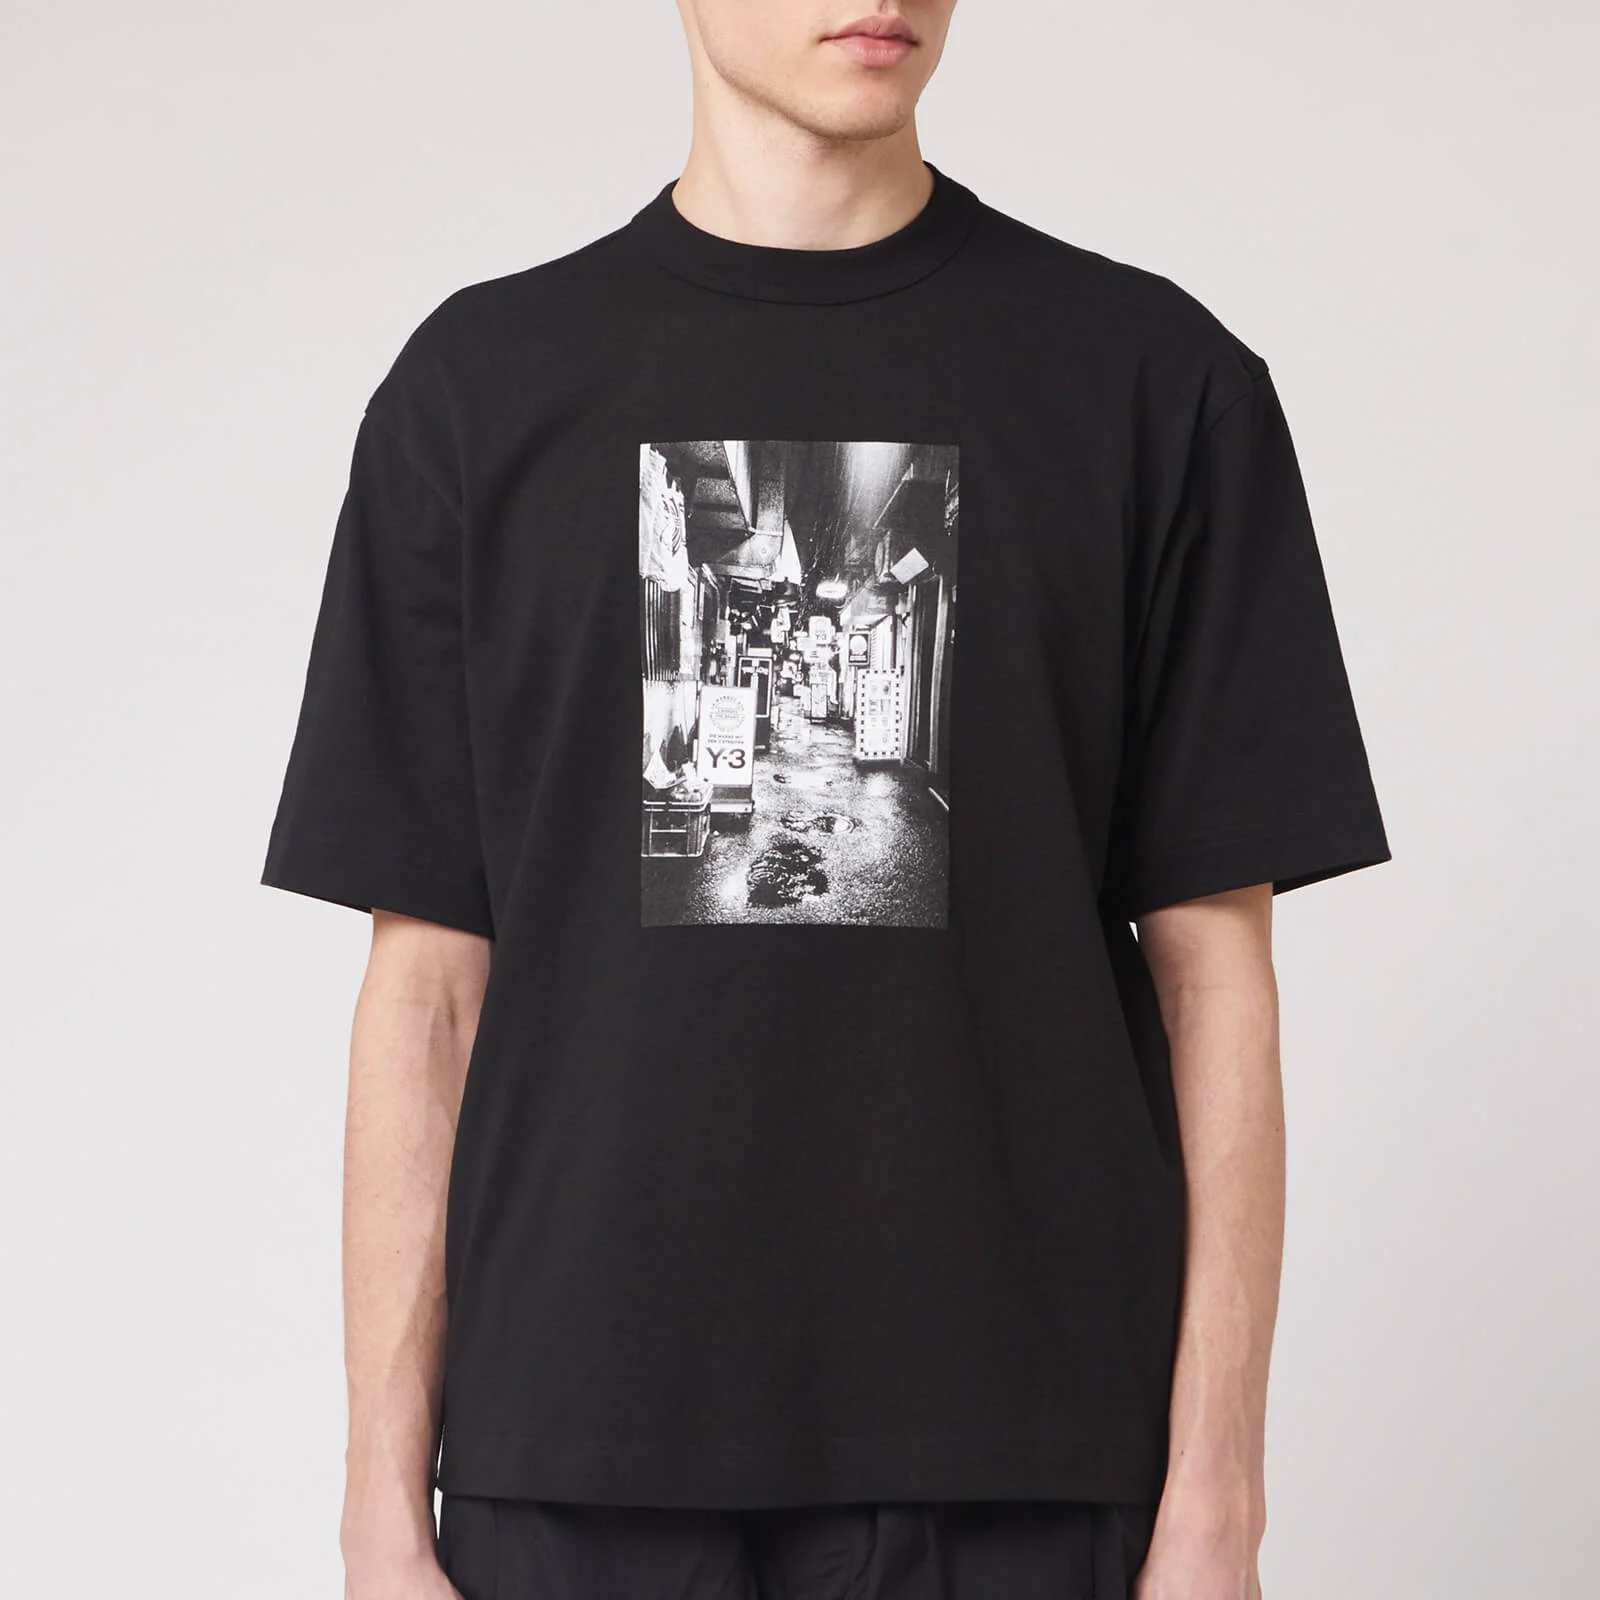 Y-3 Men's Alleway Graphic Short Sleeve T-Shirt - Black Image 1